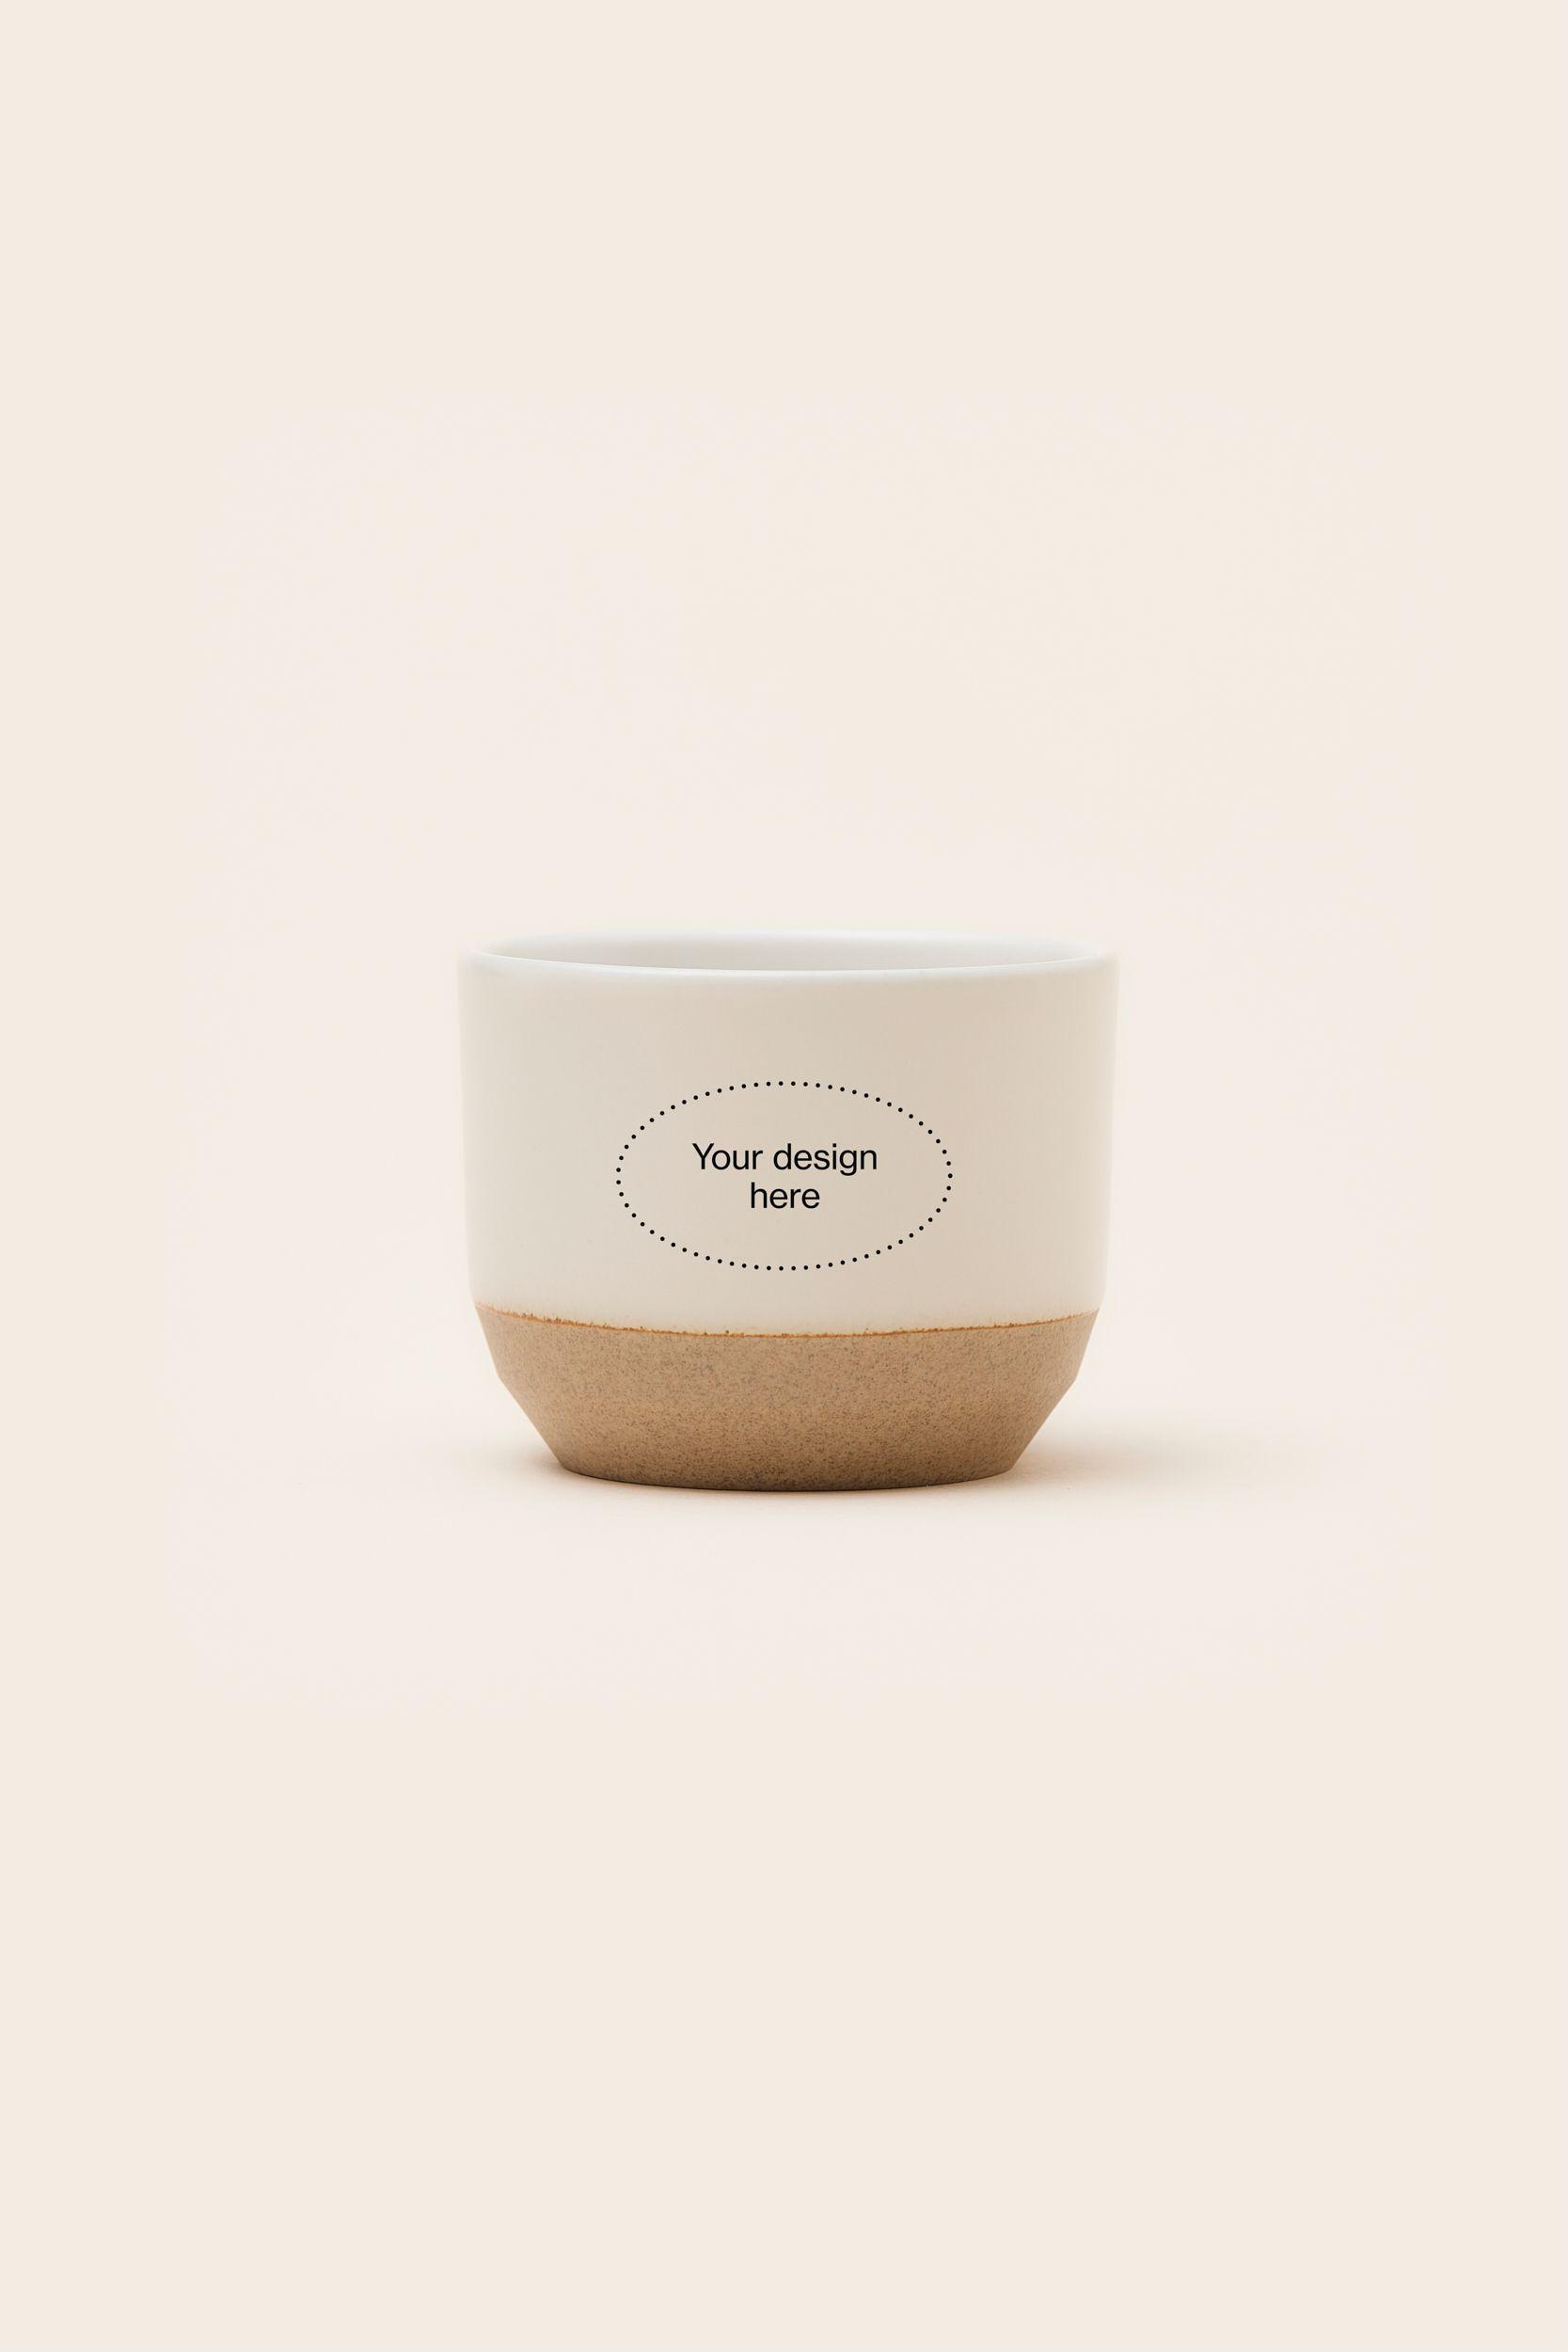 MERCHERY_Kinto espresso cup_0.18L_white+logo.jpg